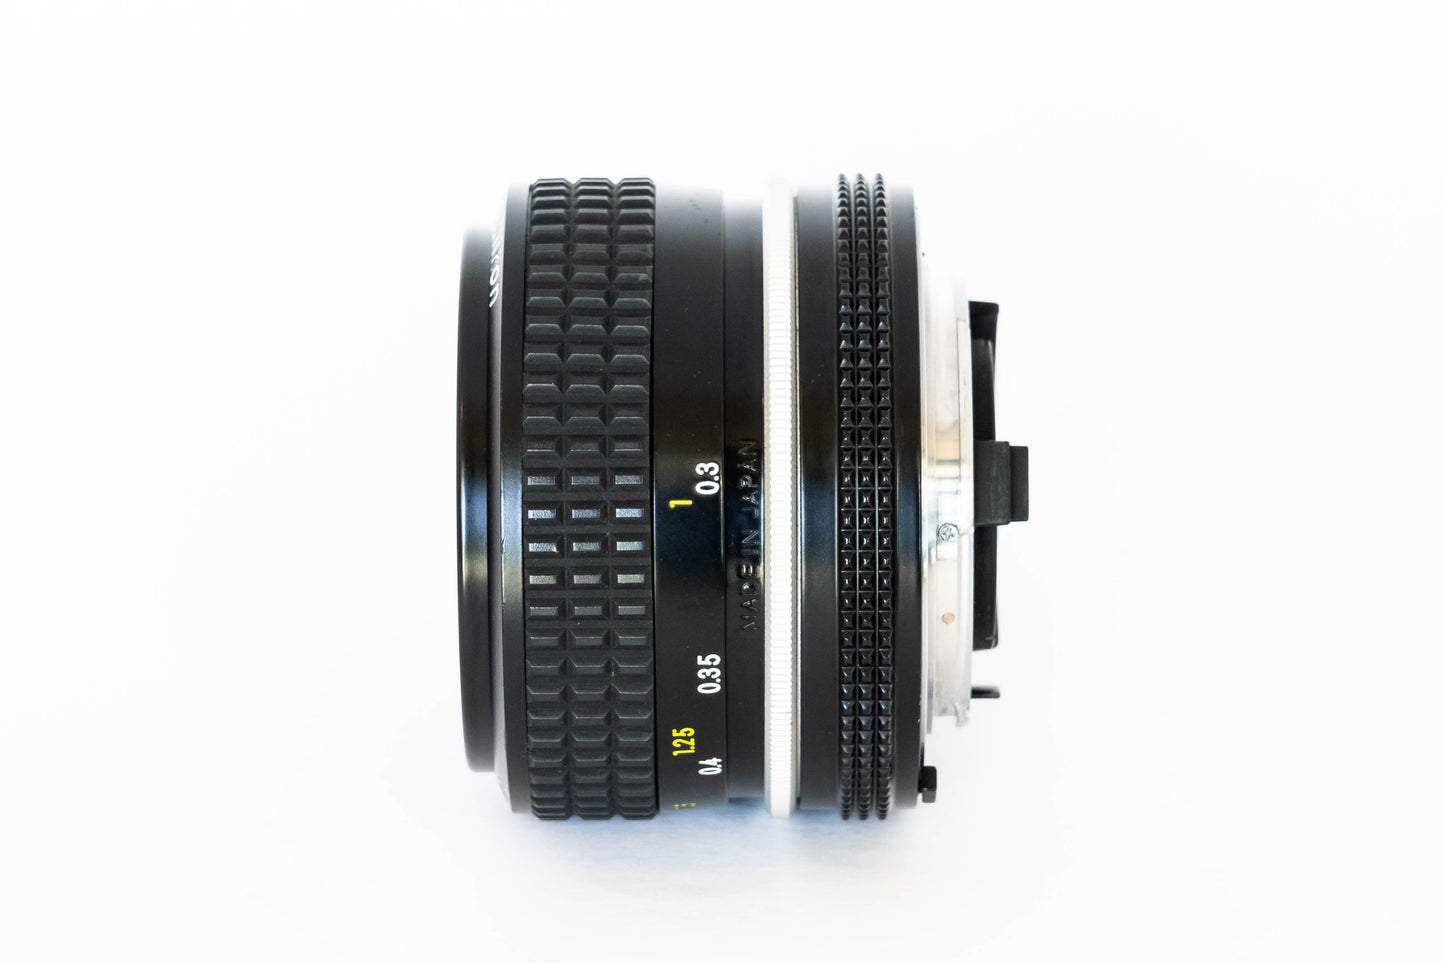 Nikon Ai Nikkor 28mm F/2.8 MF Wide Angle Lens